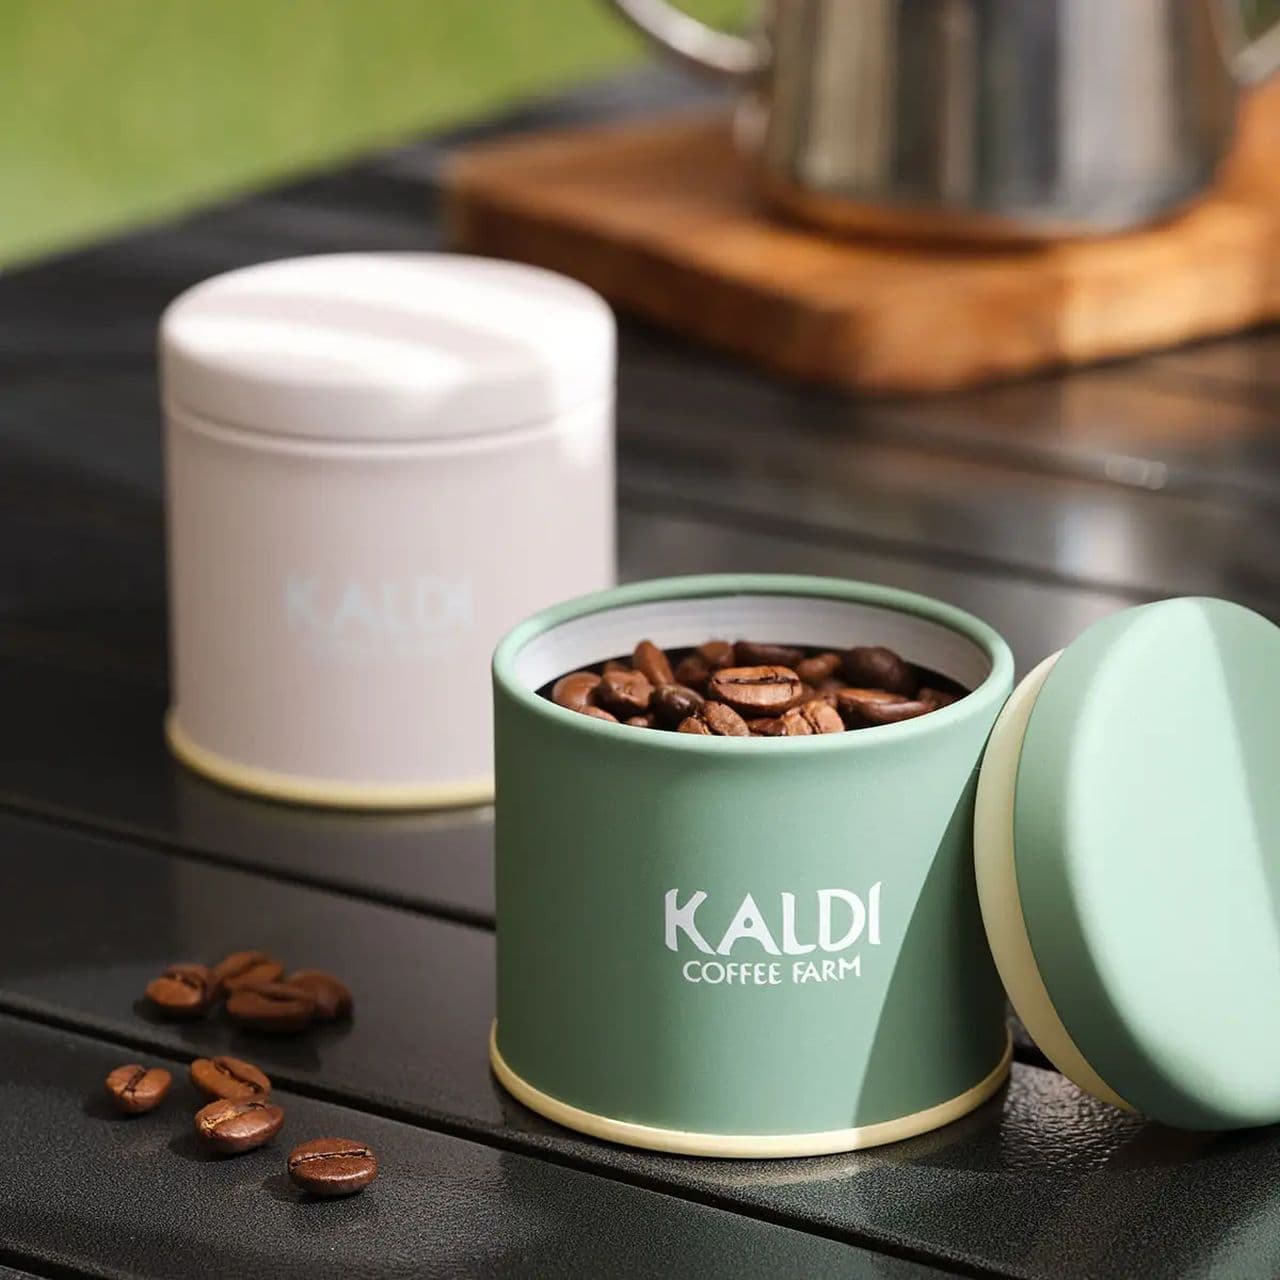 KALDI Coffee Farm "Original Mini Canister Tins